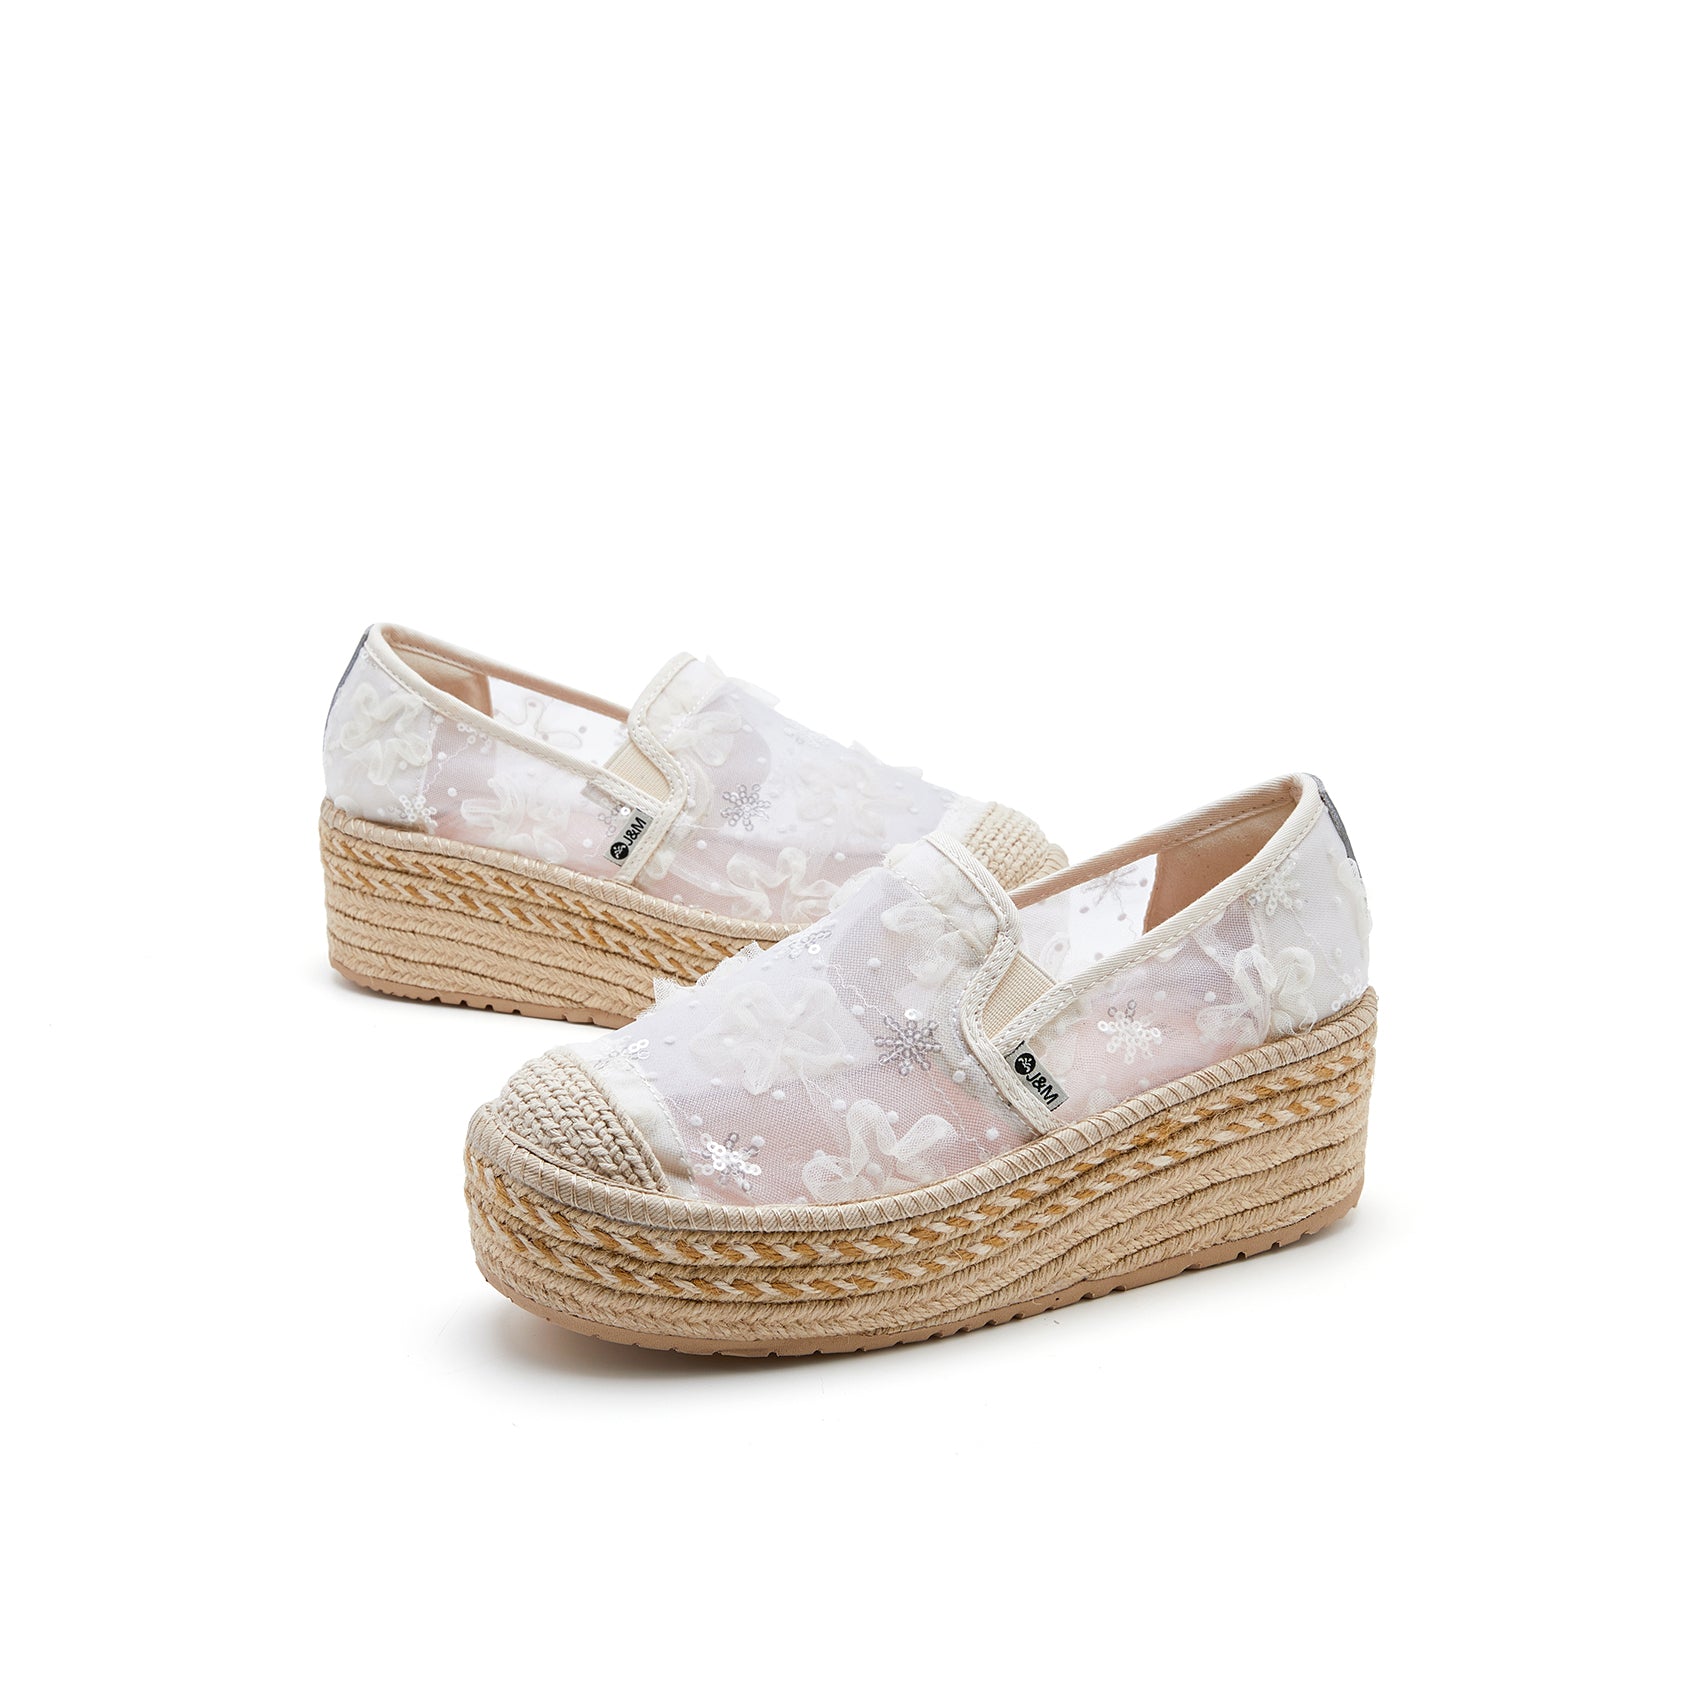 JOY&MARIO Handmade Women’s Slip-On Espadrille Mesh Loafers in Beige-86178W